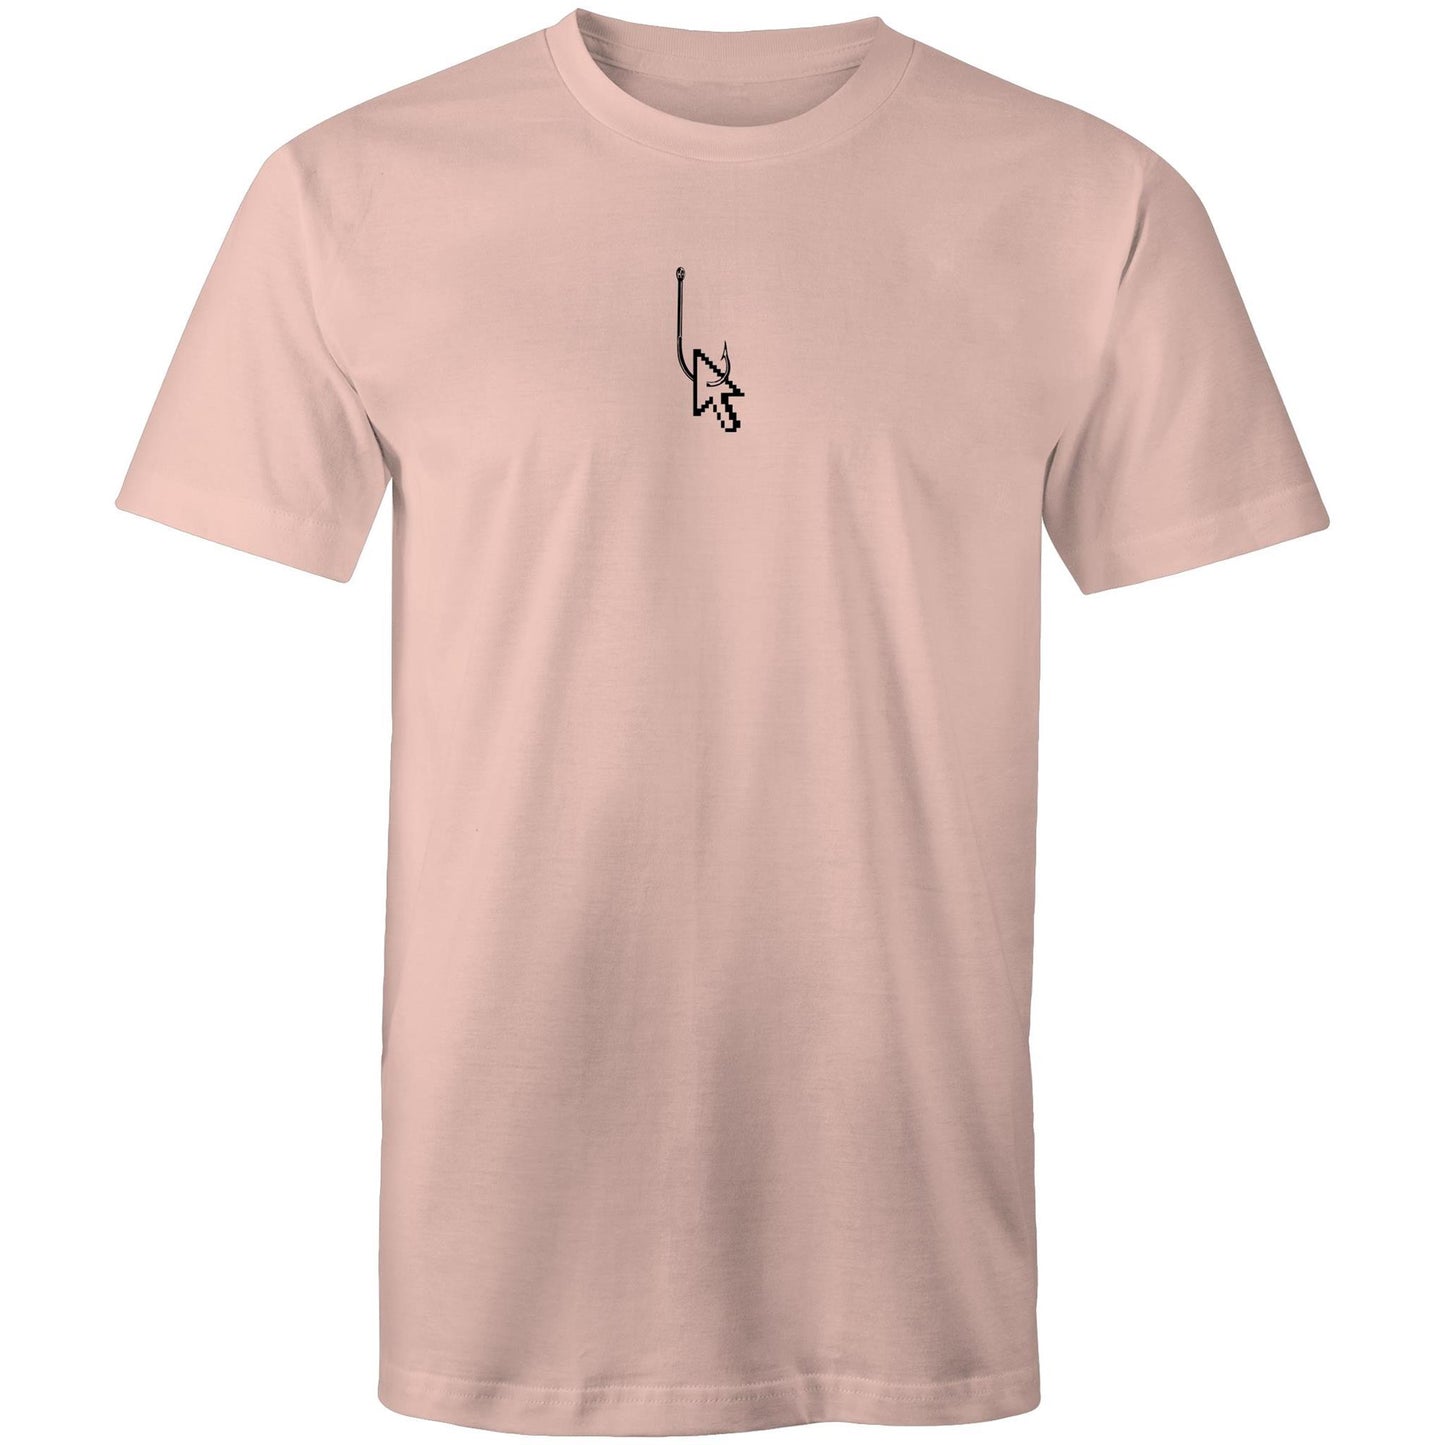 Clickbait T Shirts for Men (Unisex)